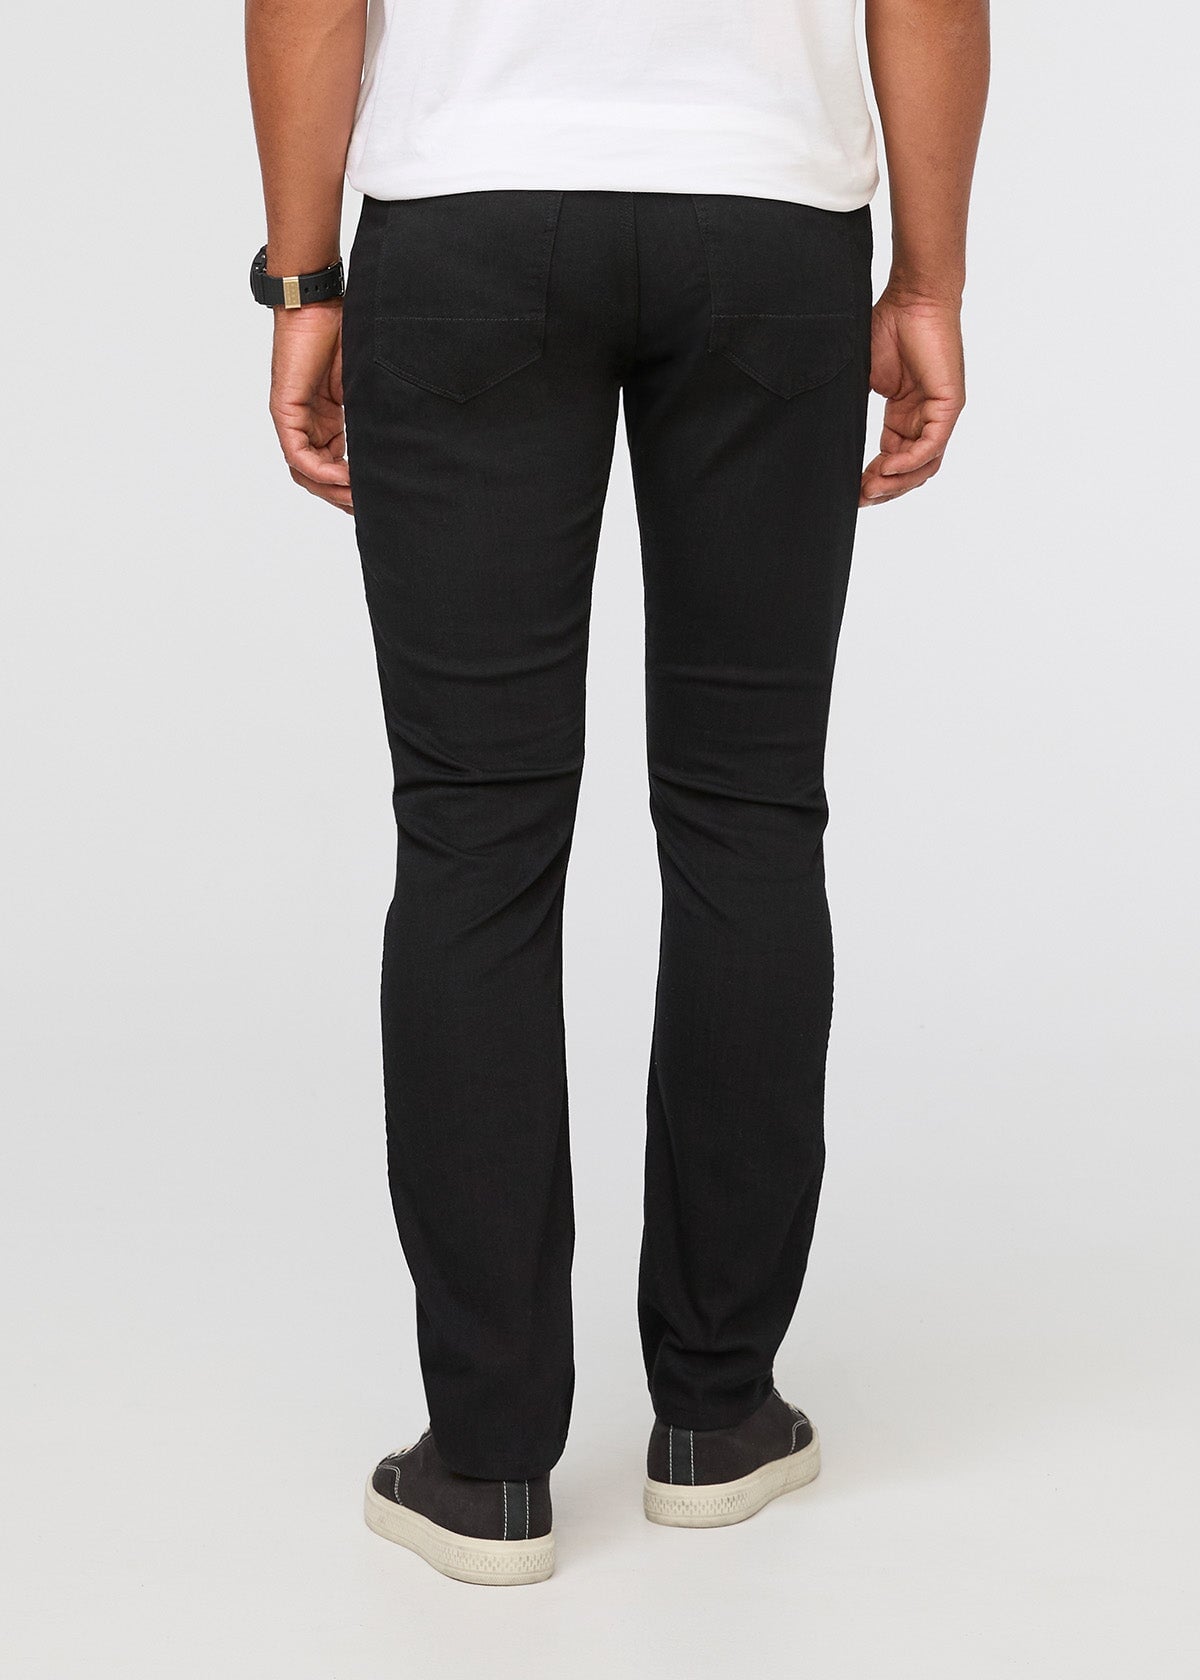 GAP Denim Soft Wear Slim Taper Black Jeans/Pants/Slacks/Trousers 36 x 30